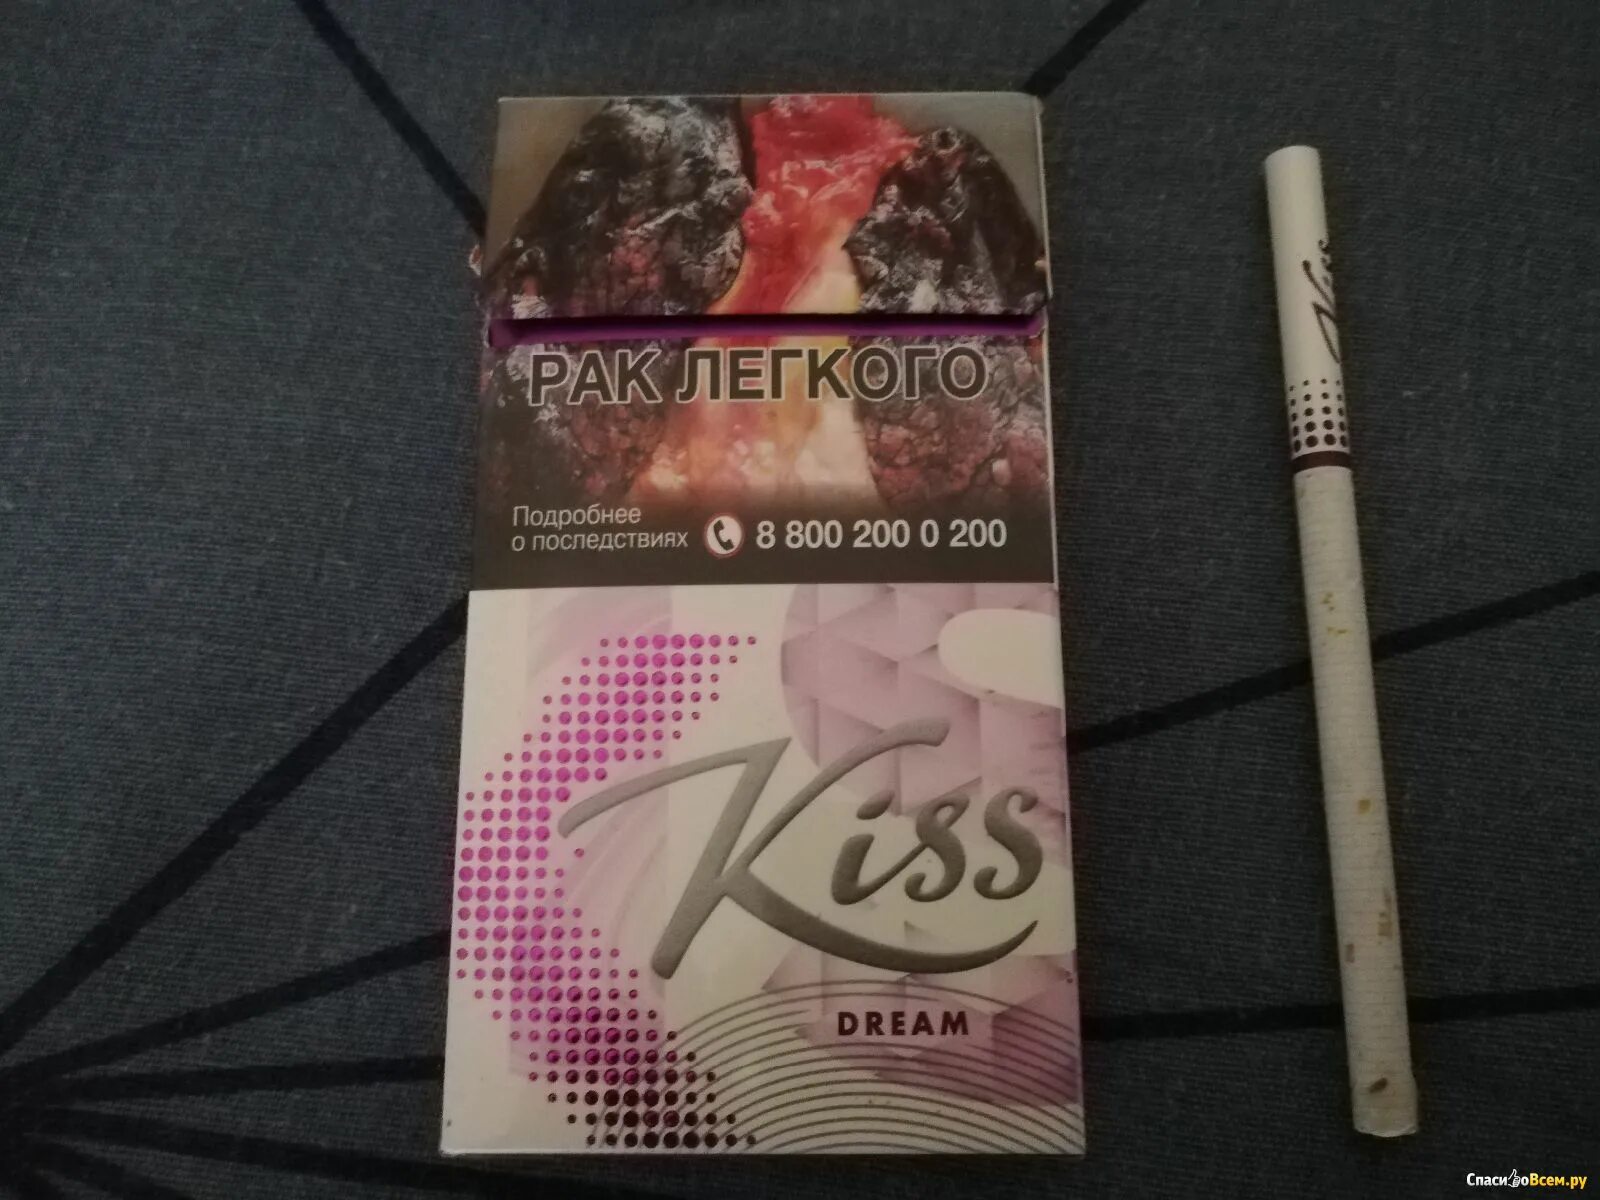 Сигареты Kiss Dream super Slims. Кисс фиолетовый сигареты слим. Сигареты Кисс Дрим фиолетовые. Kiss Dream SS сигареты. Винстон кис